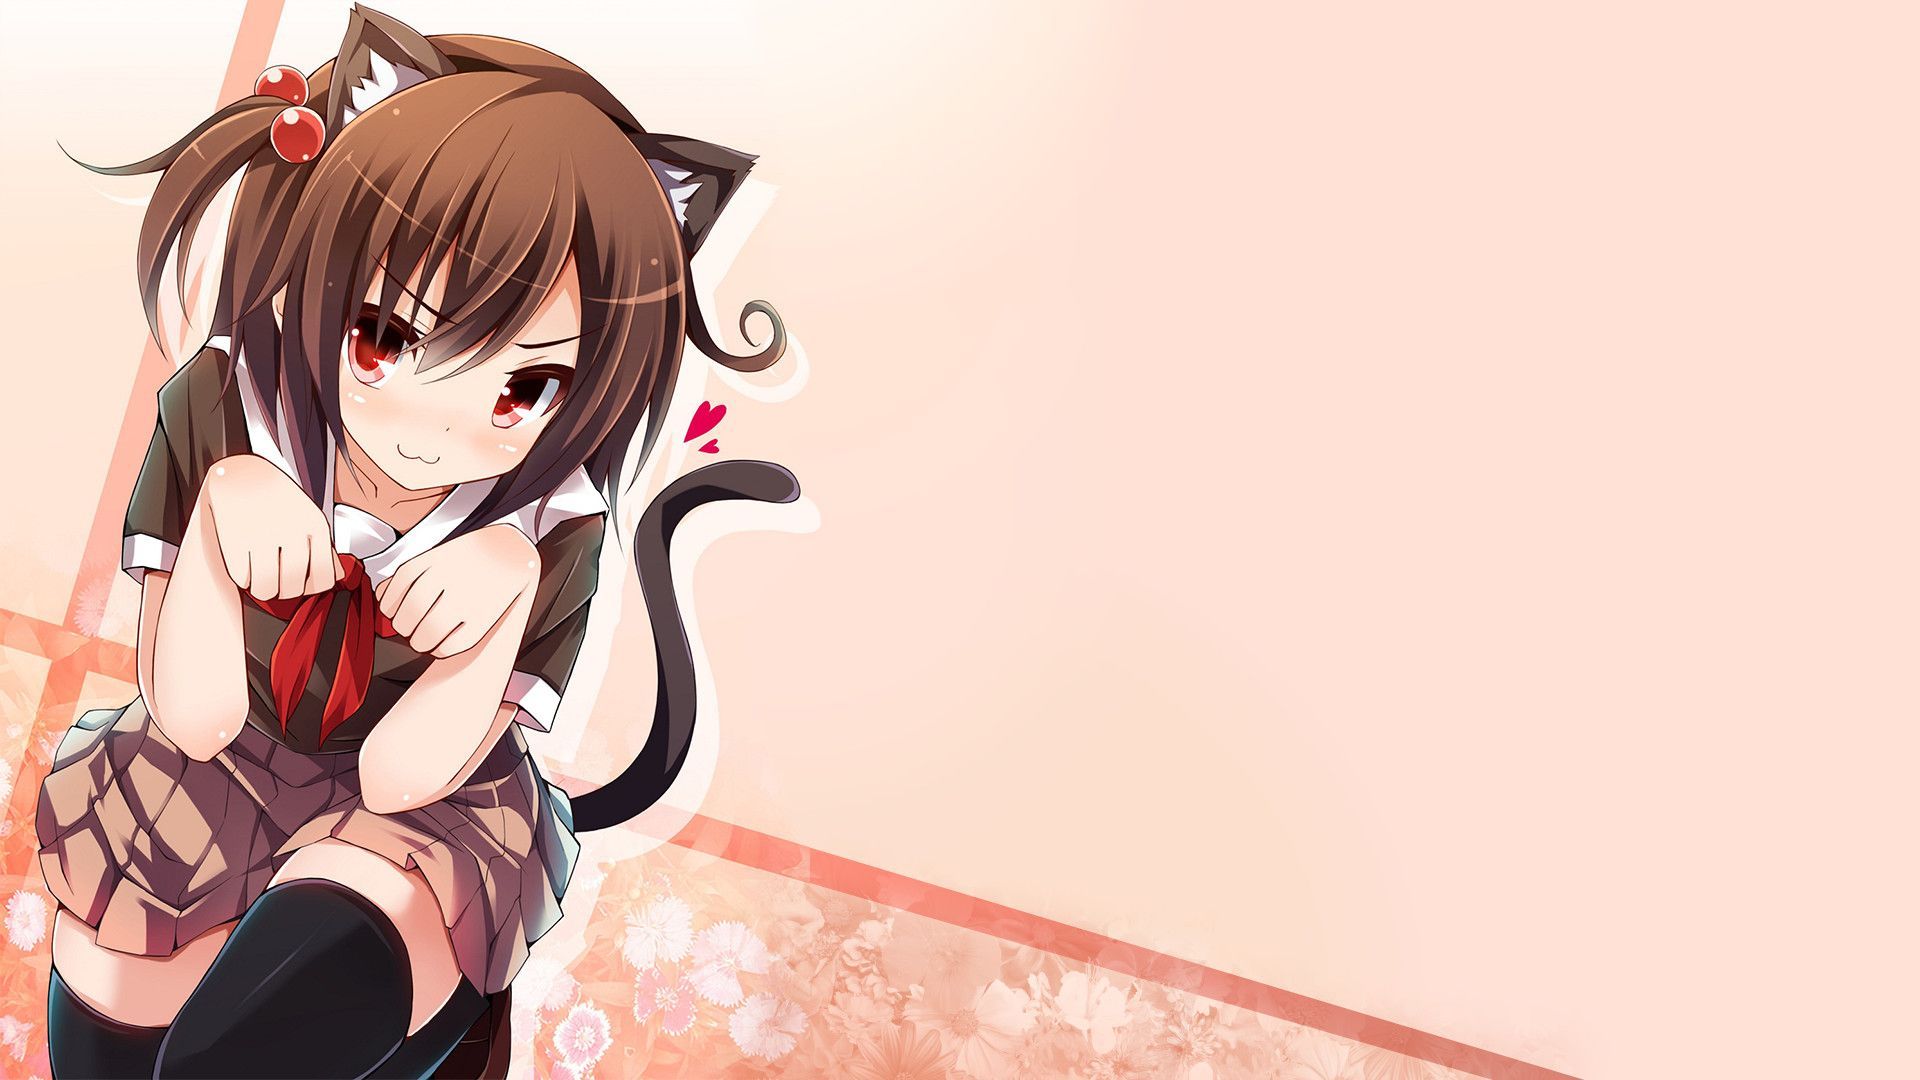 shy anime cat girl is baaaaaack  Anime Fans Wallpapers and Images   Desktop Nexus Groups